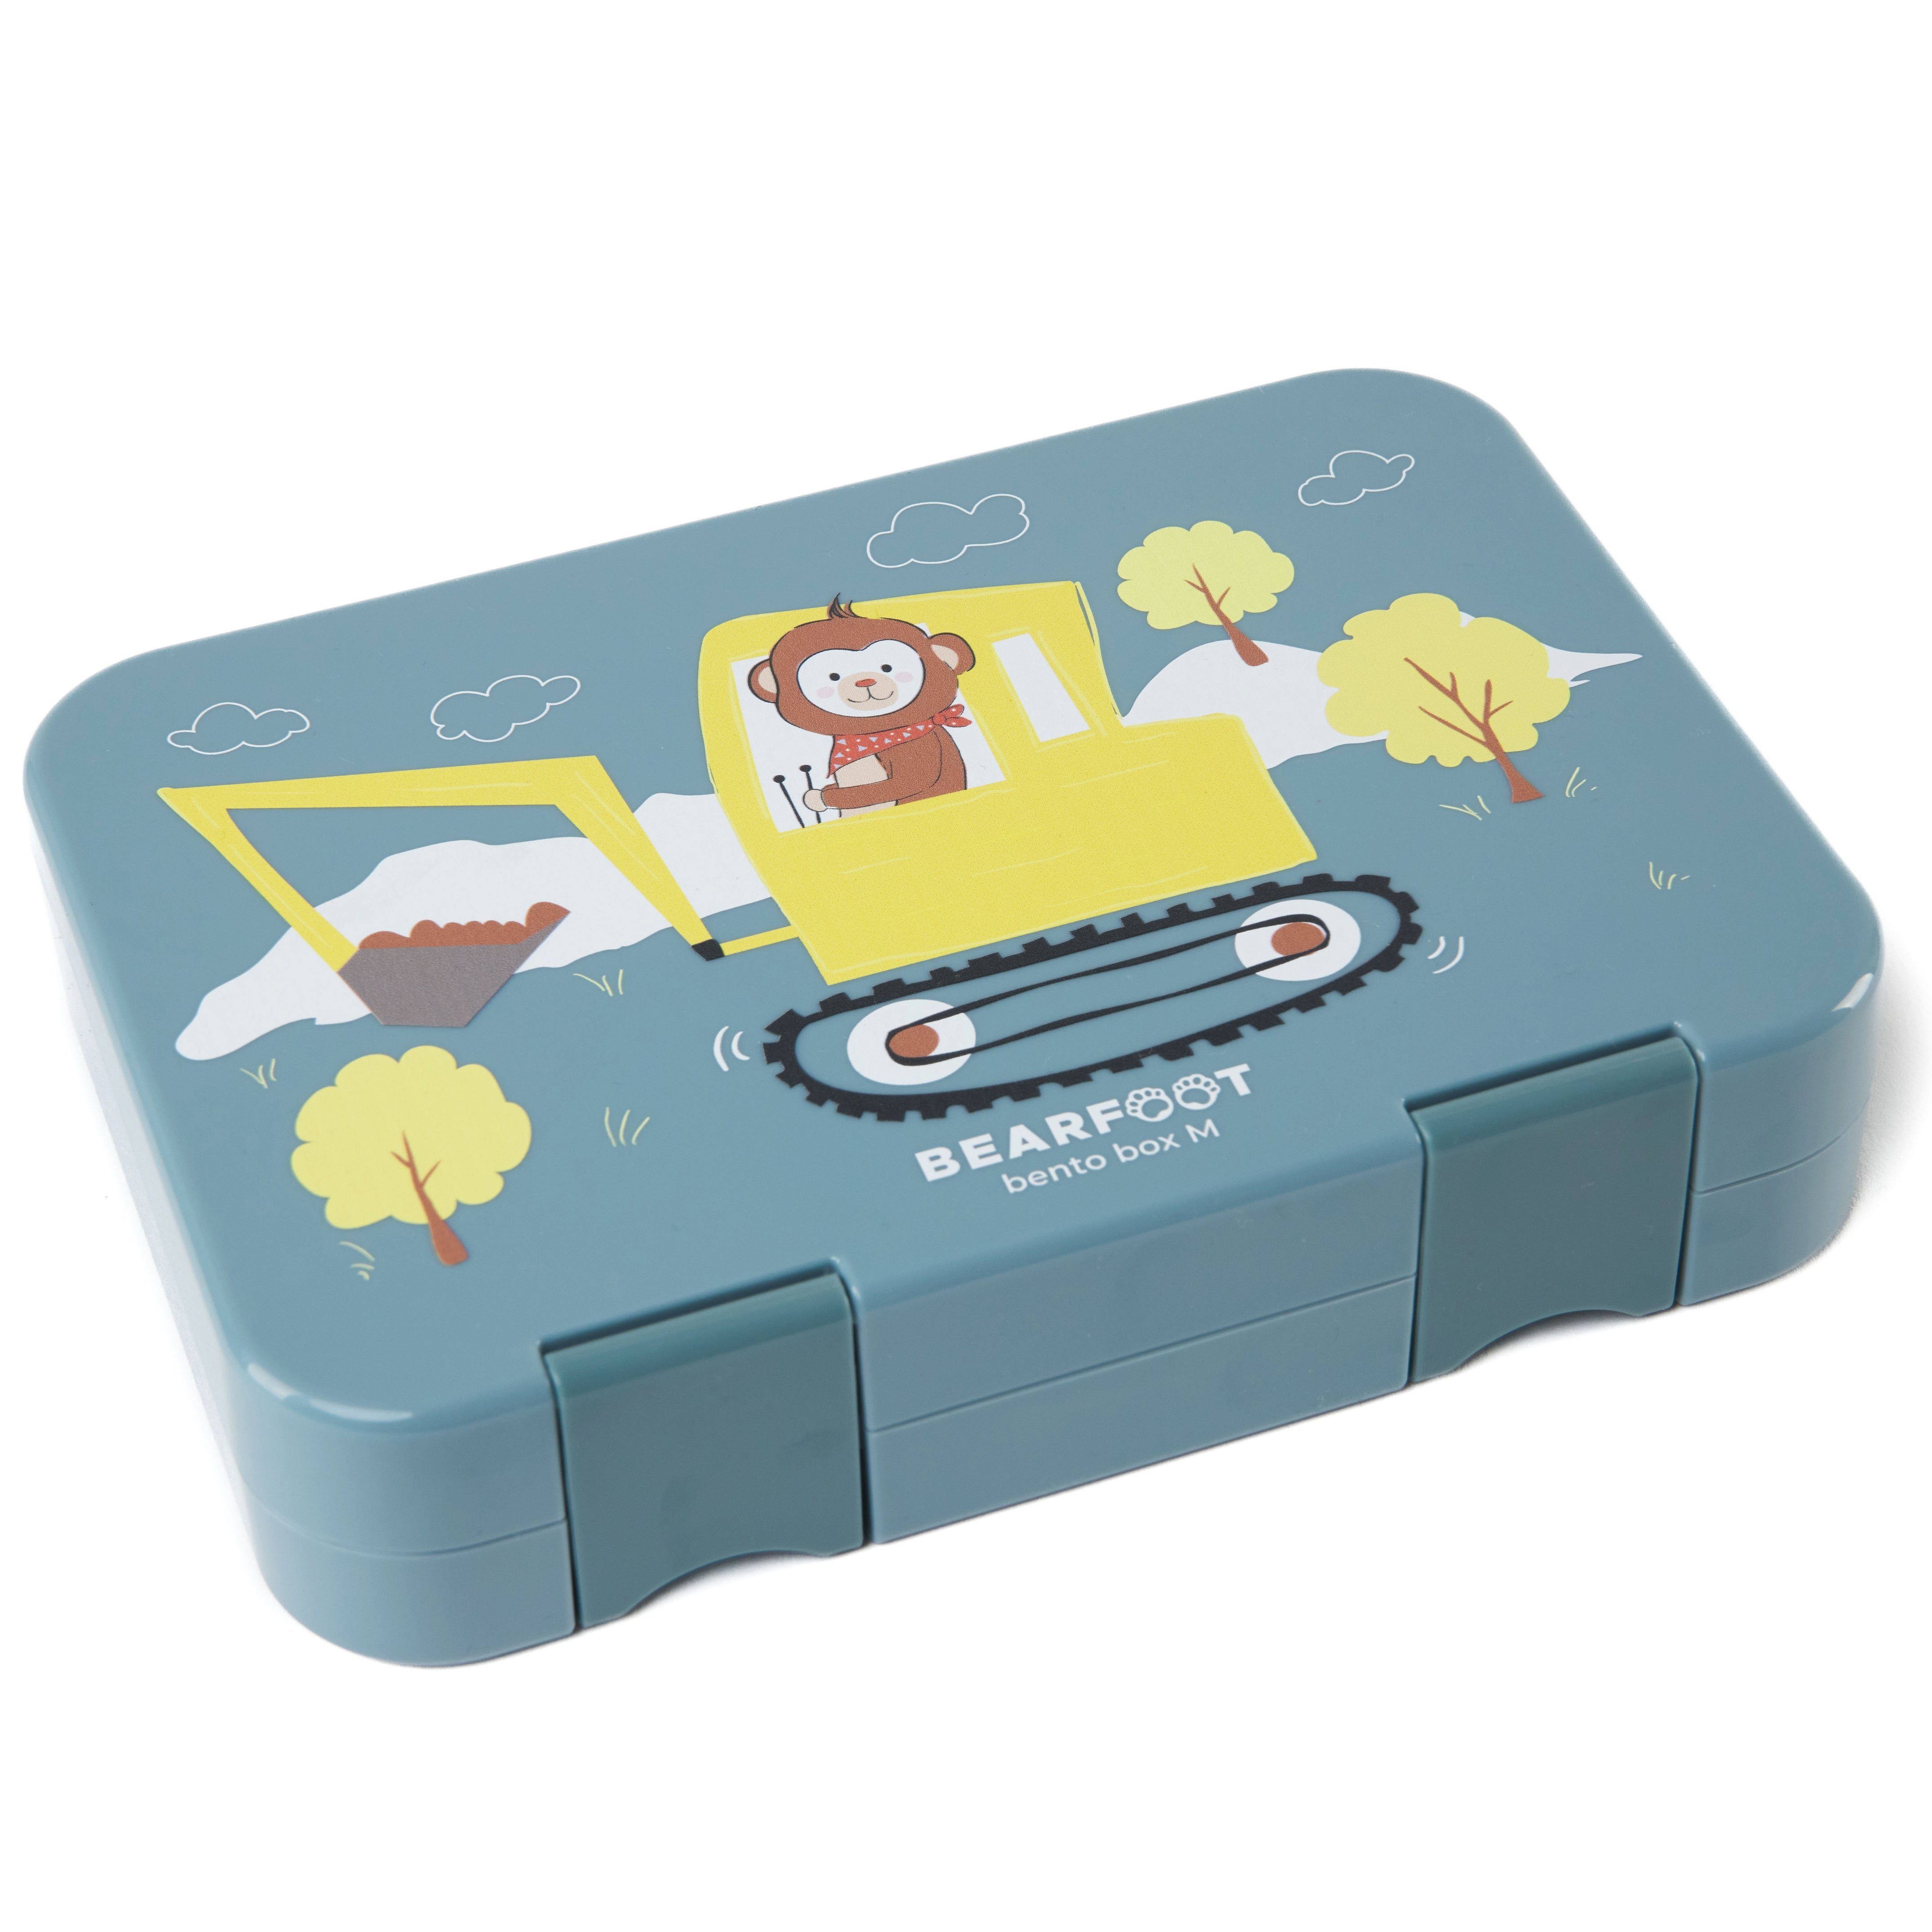 BEARFOOT Lunchbox Brotdose Kinder mit Fächern, Lunchbox, Bento box - Affe blau, handgezeichnete Designs, modular Baggeraffe-blau